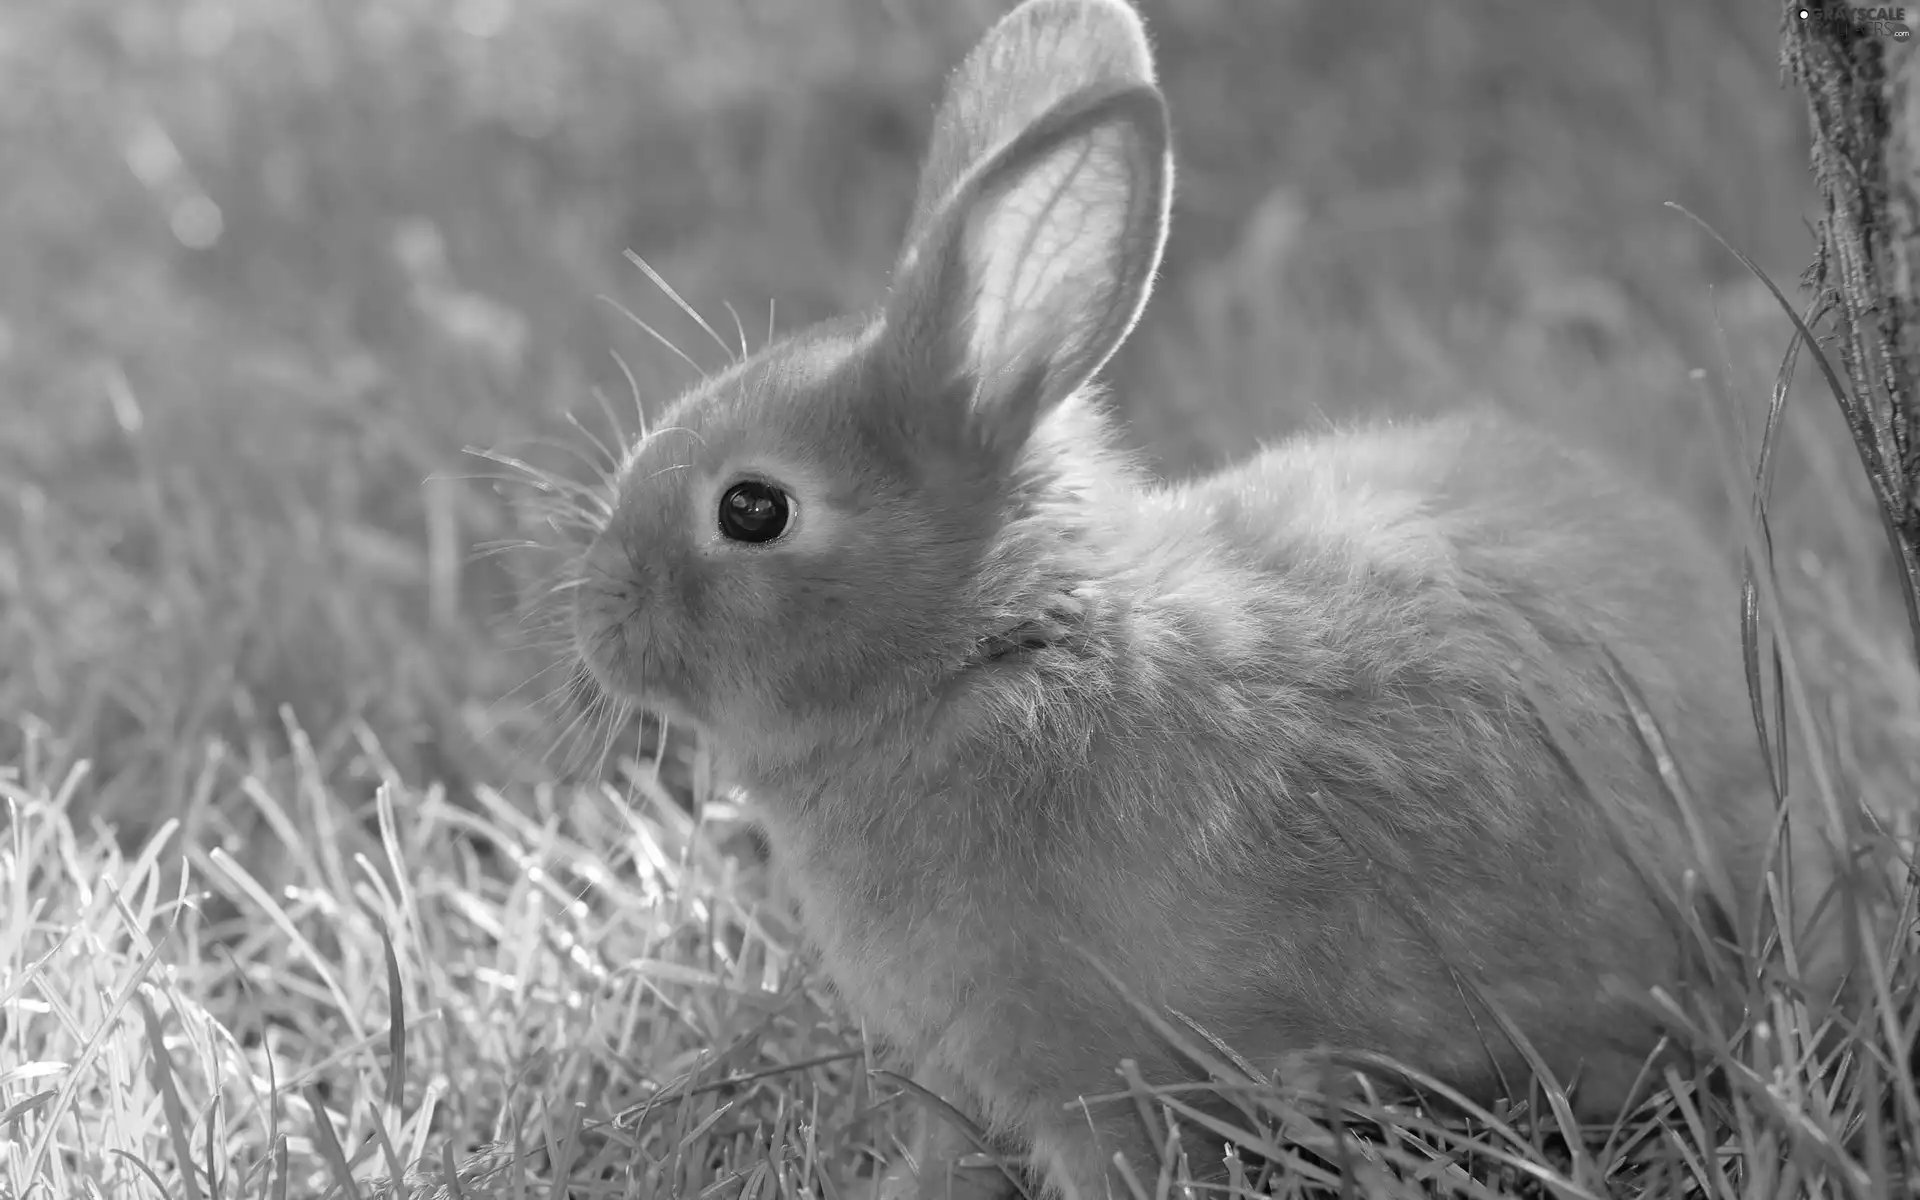 Bunny, grass